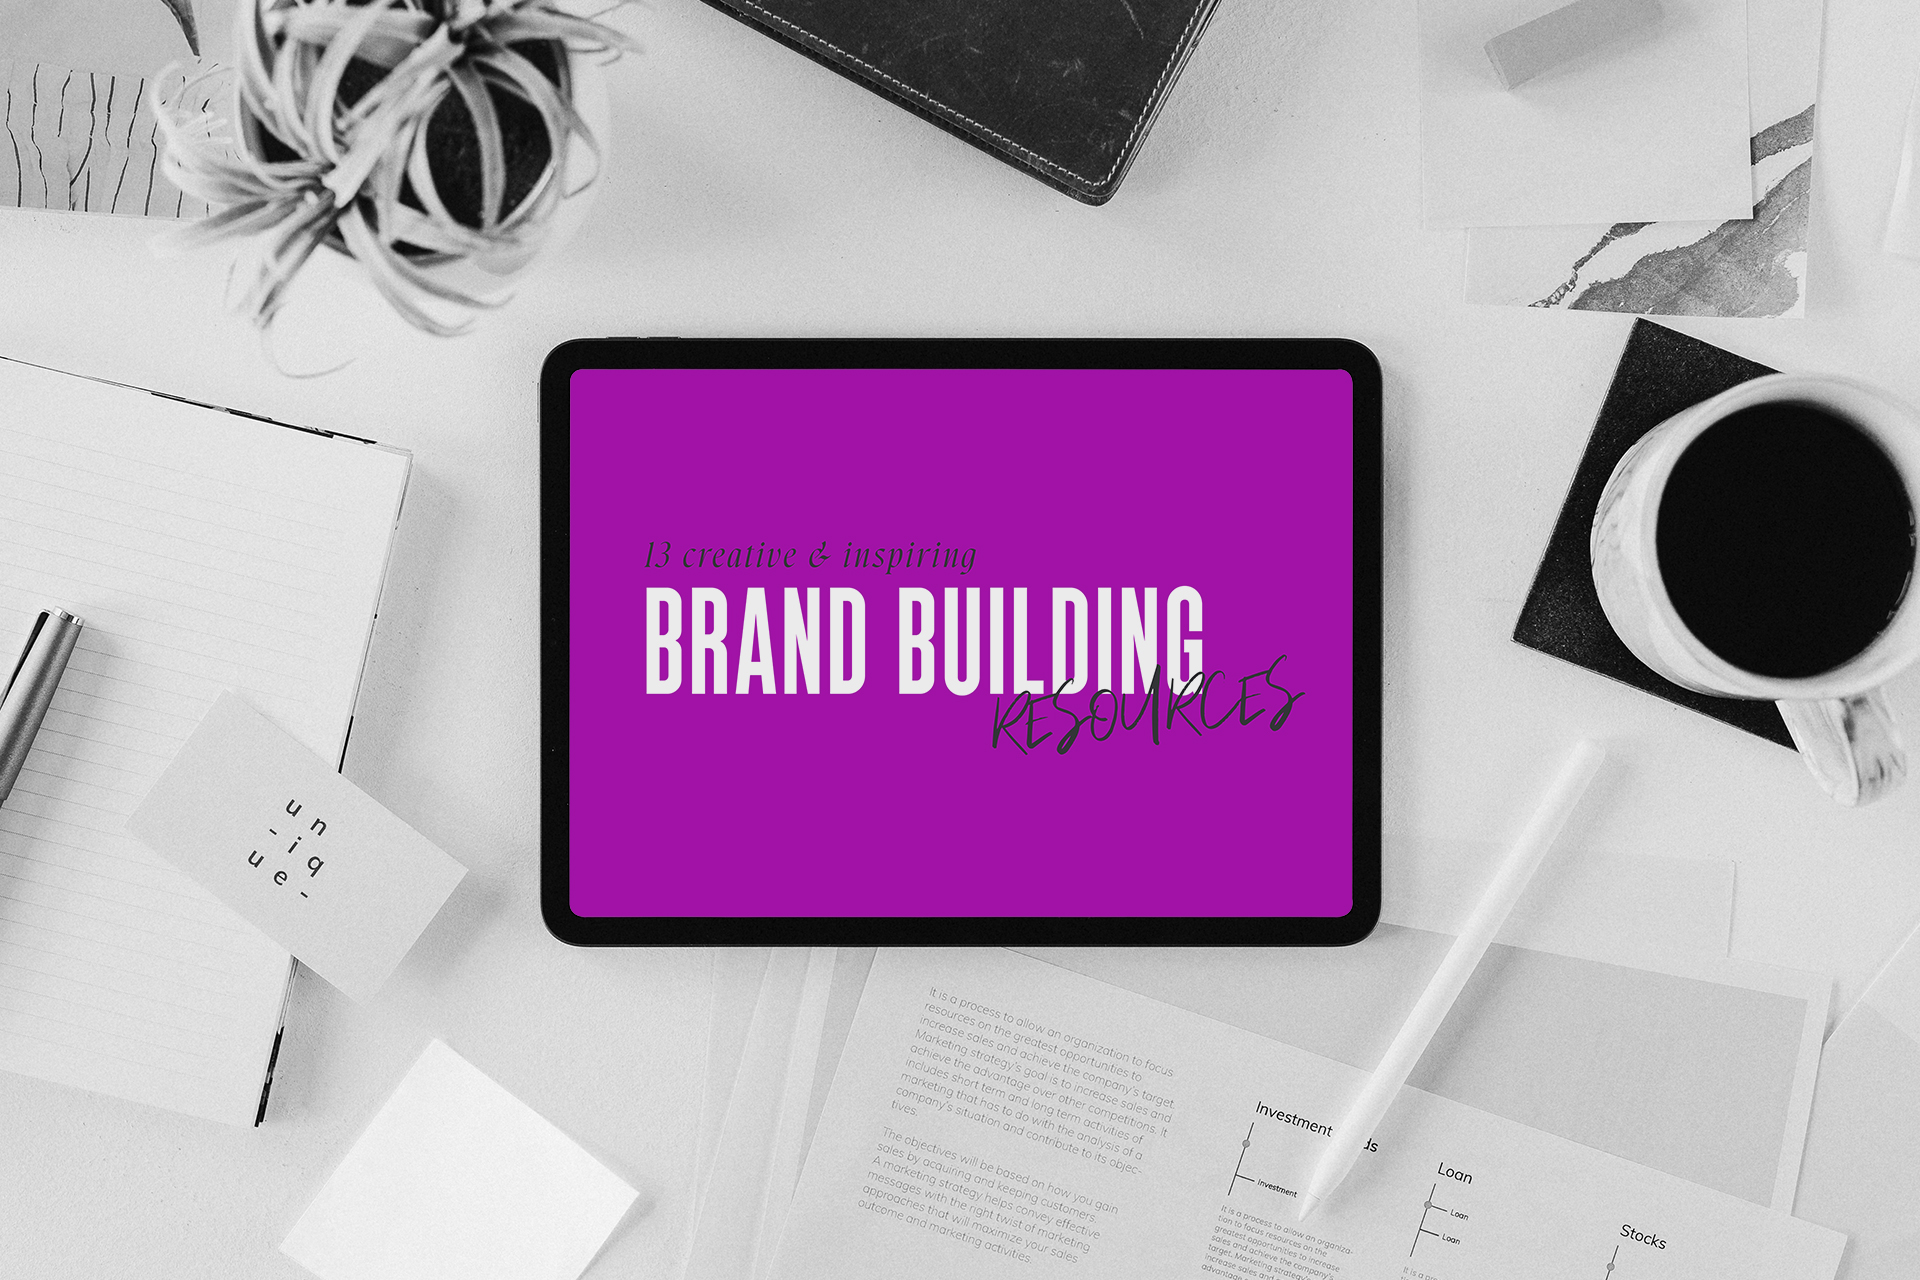 13 Inspiring Brand Building Resources